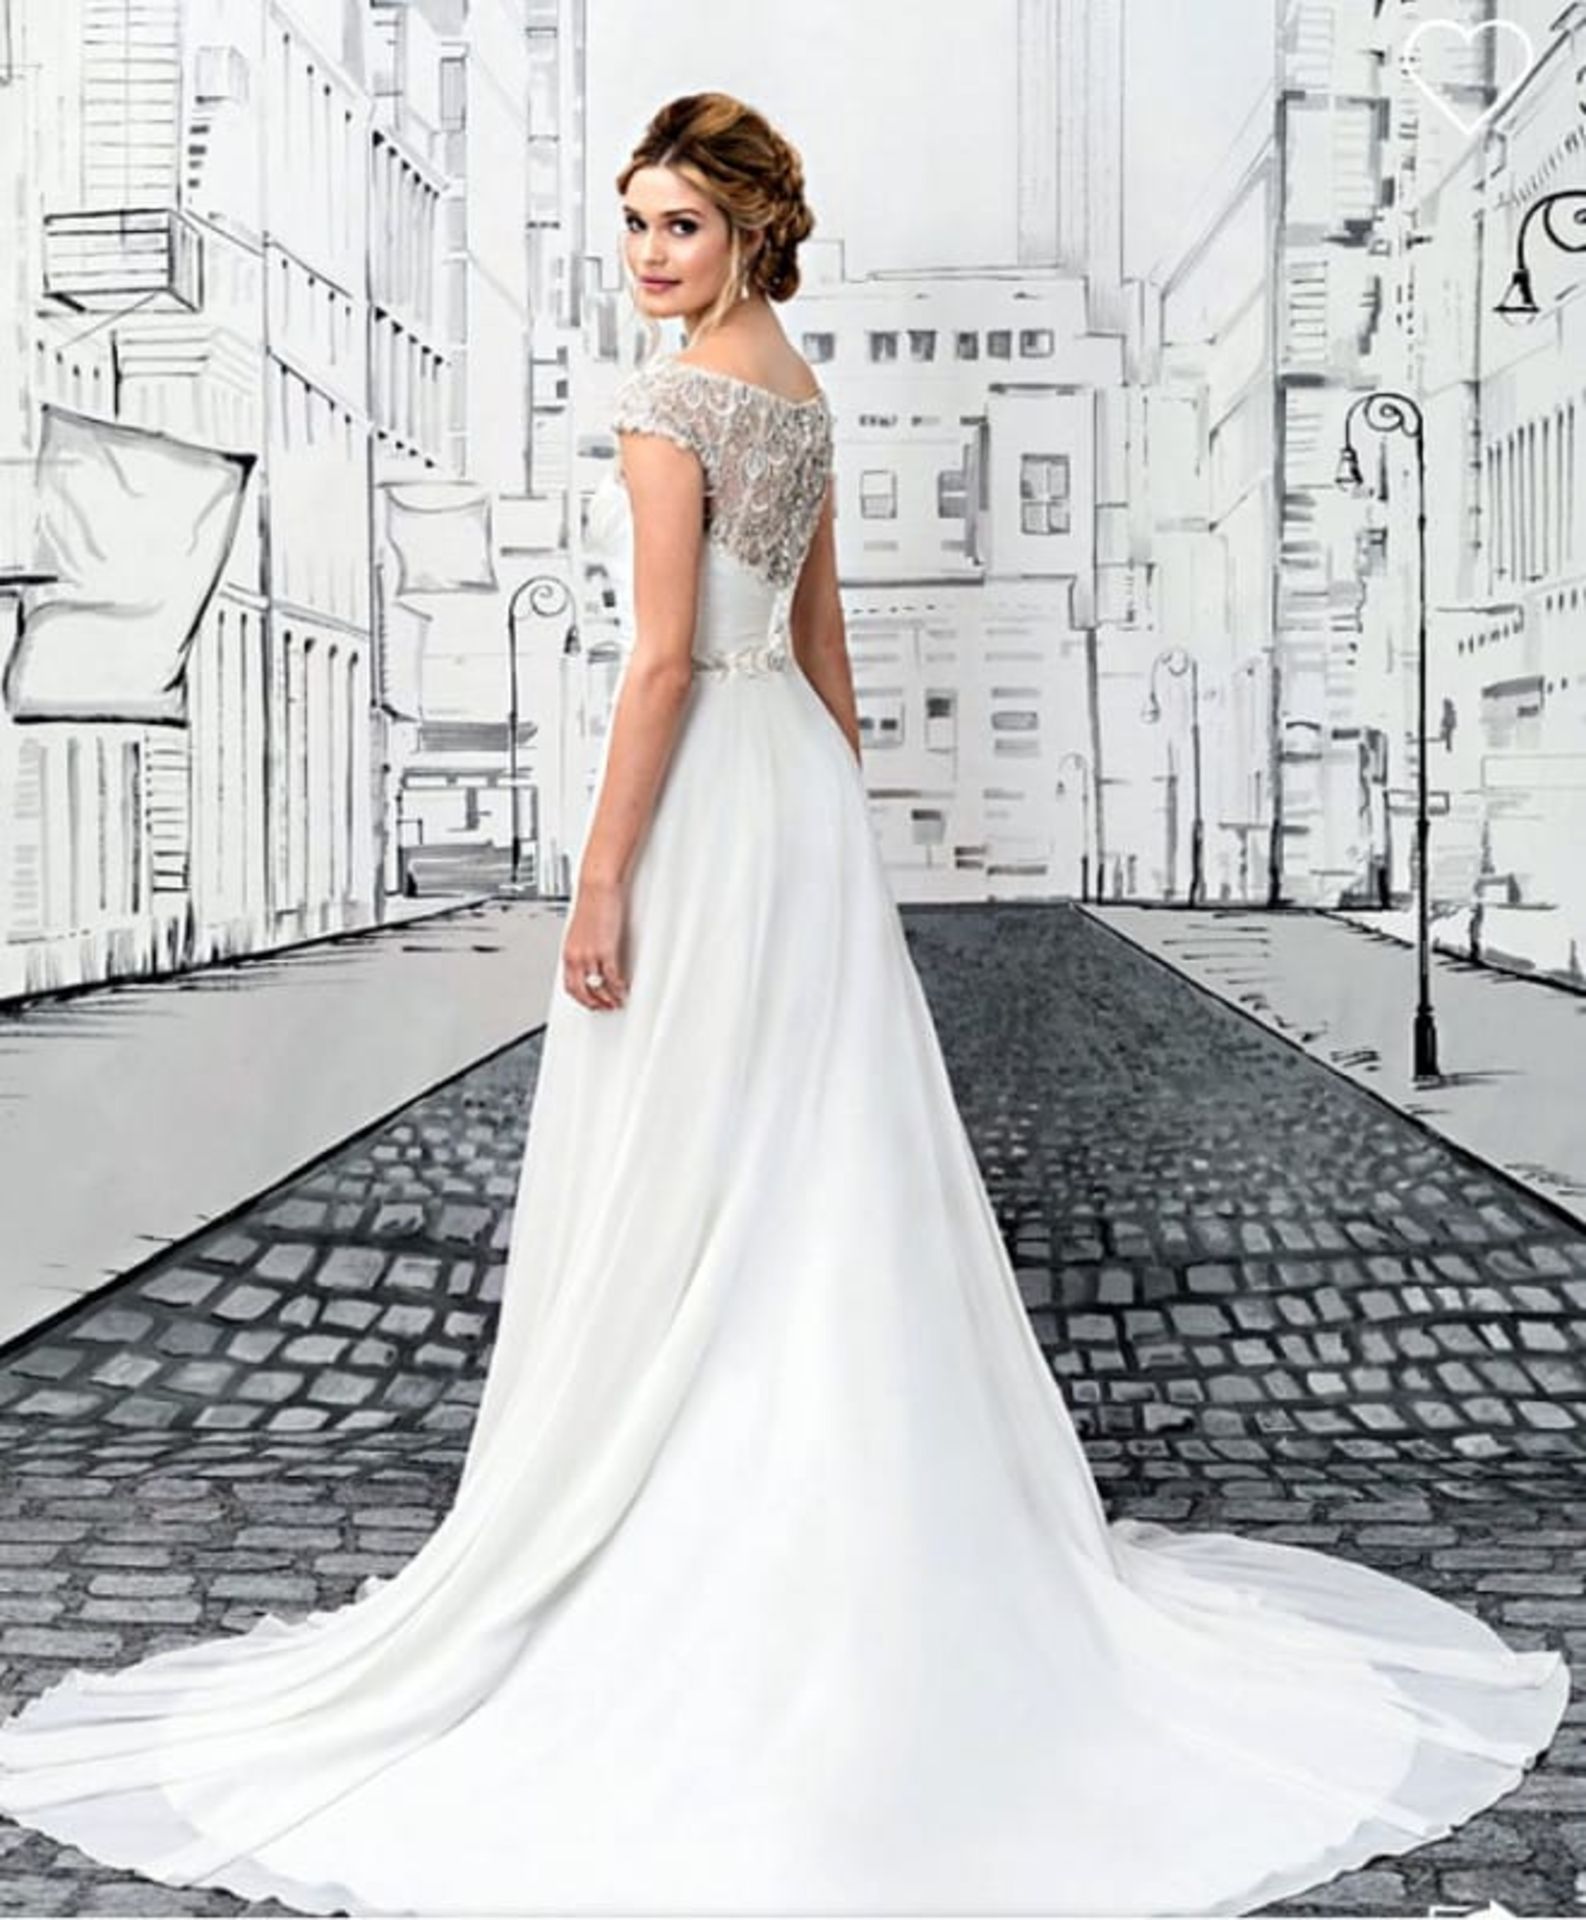 1 x Justin Alexander 'Aphrodite' Chiffon Bridal Gown - UK Size 16 - RRP £1,415 - Image 12 of 23